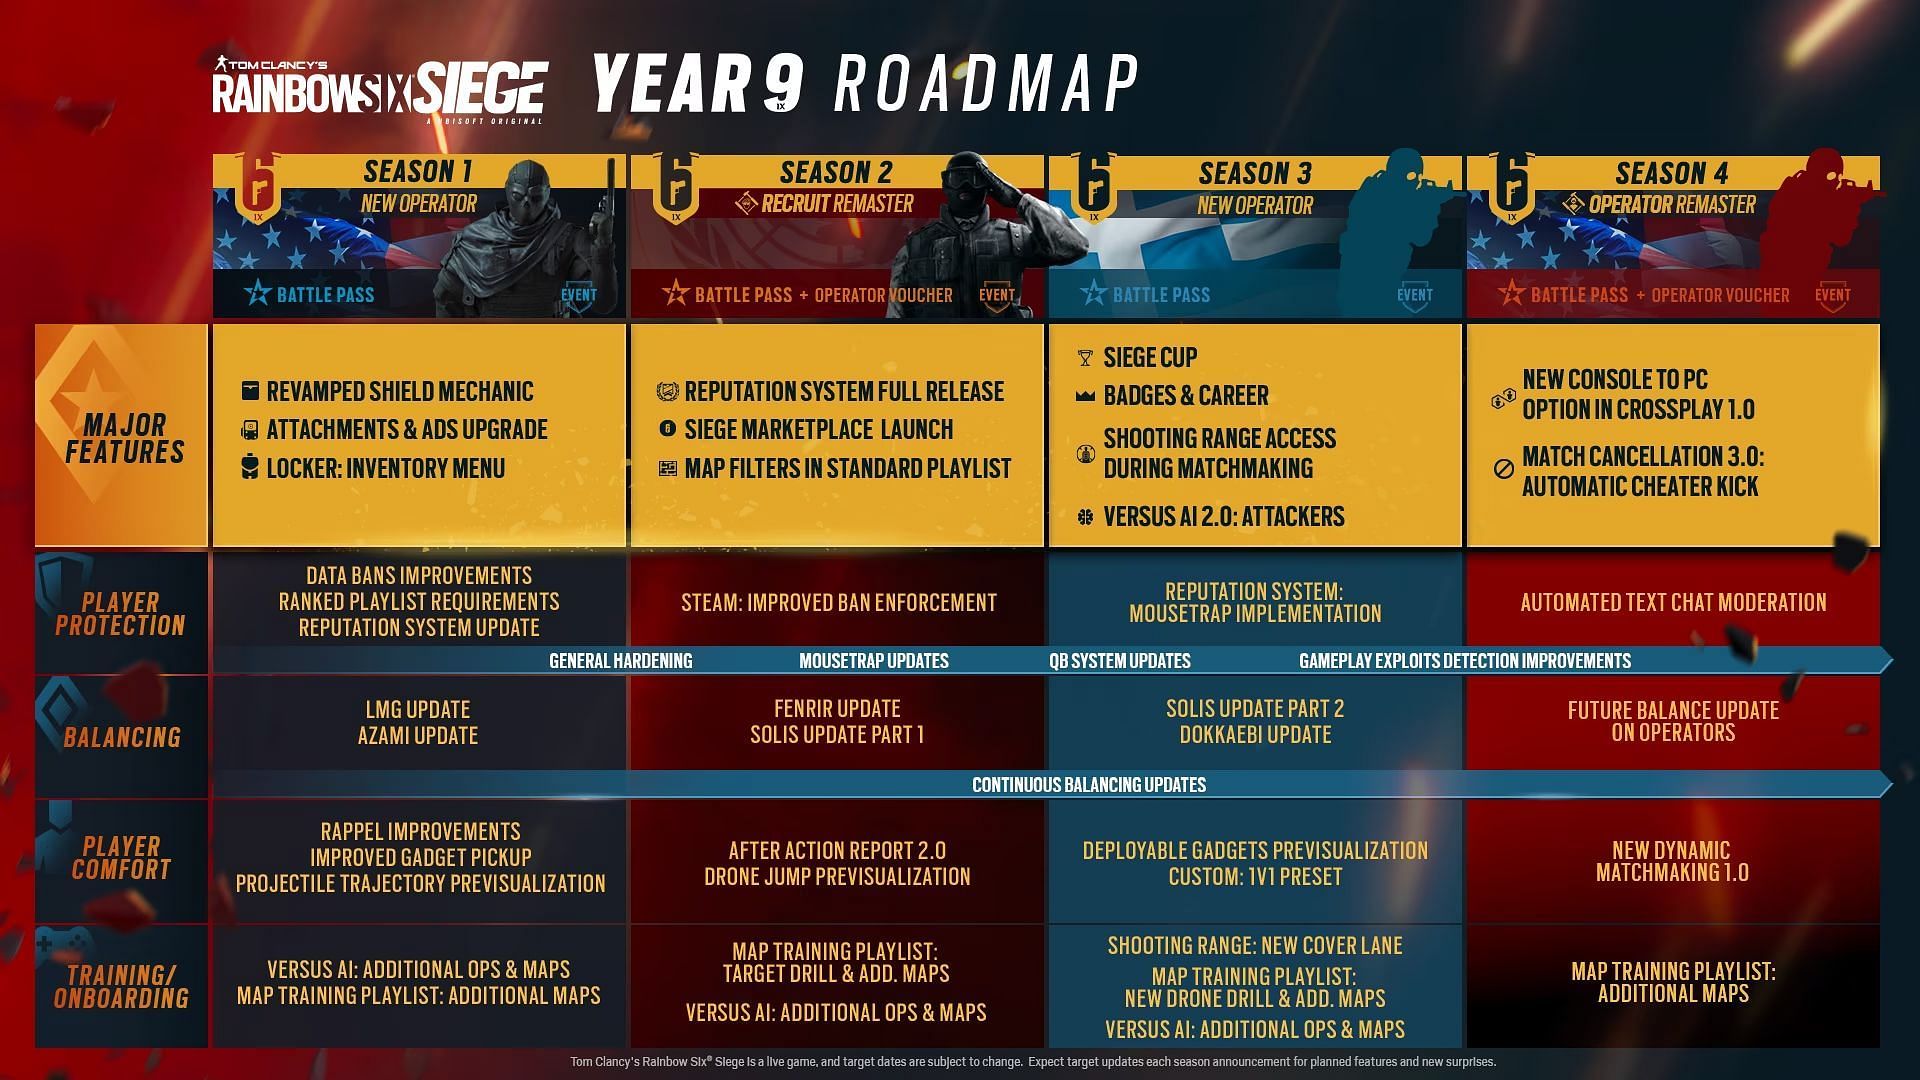 Rainbow Six Siege Year 9 Roadmap (Image via Ubisoft)